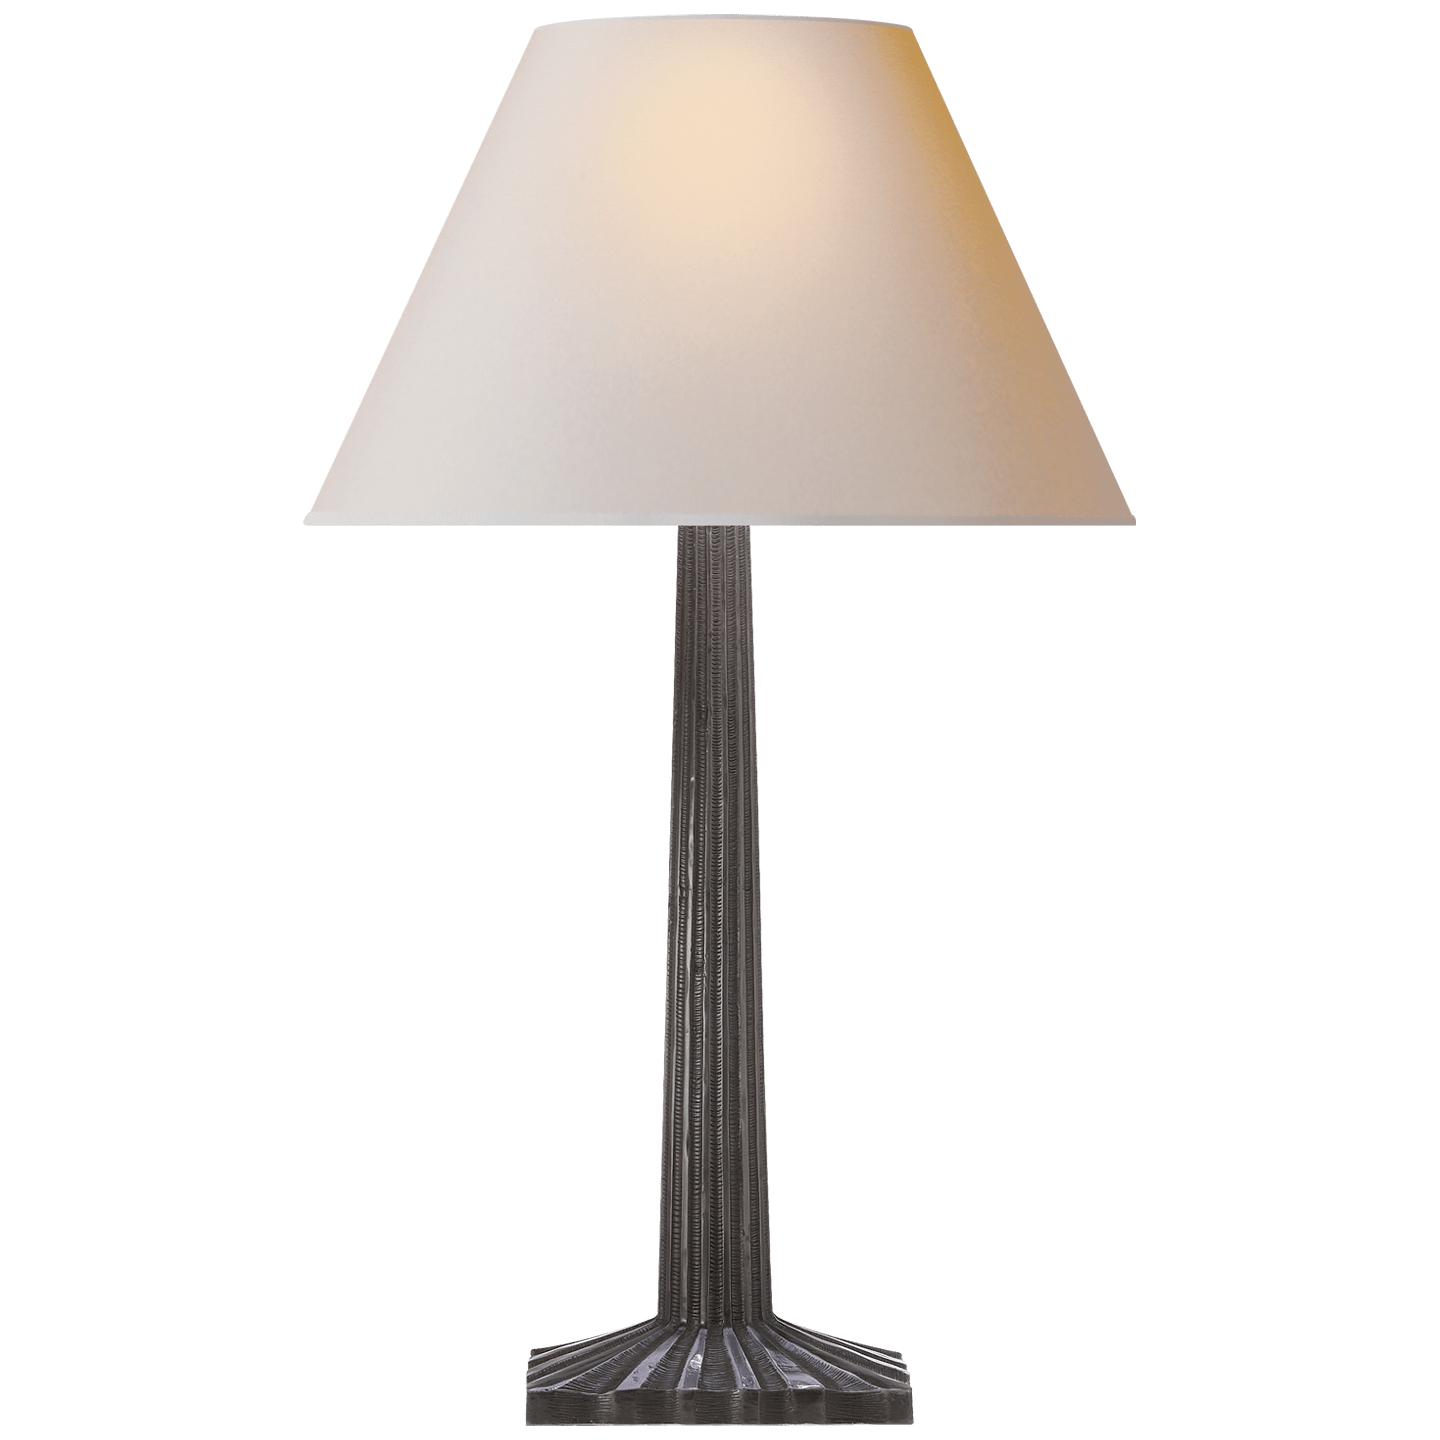 Купить Настольная лампа Strie Fluted Column Table Lamp в интернет-магазине roooms.ru